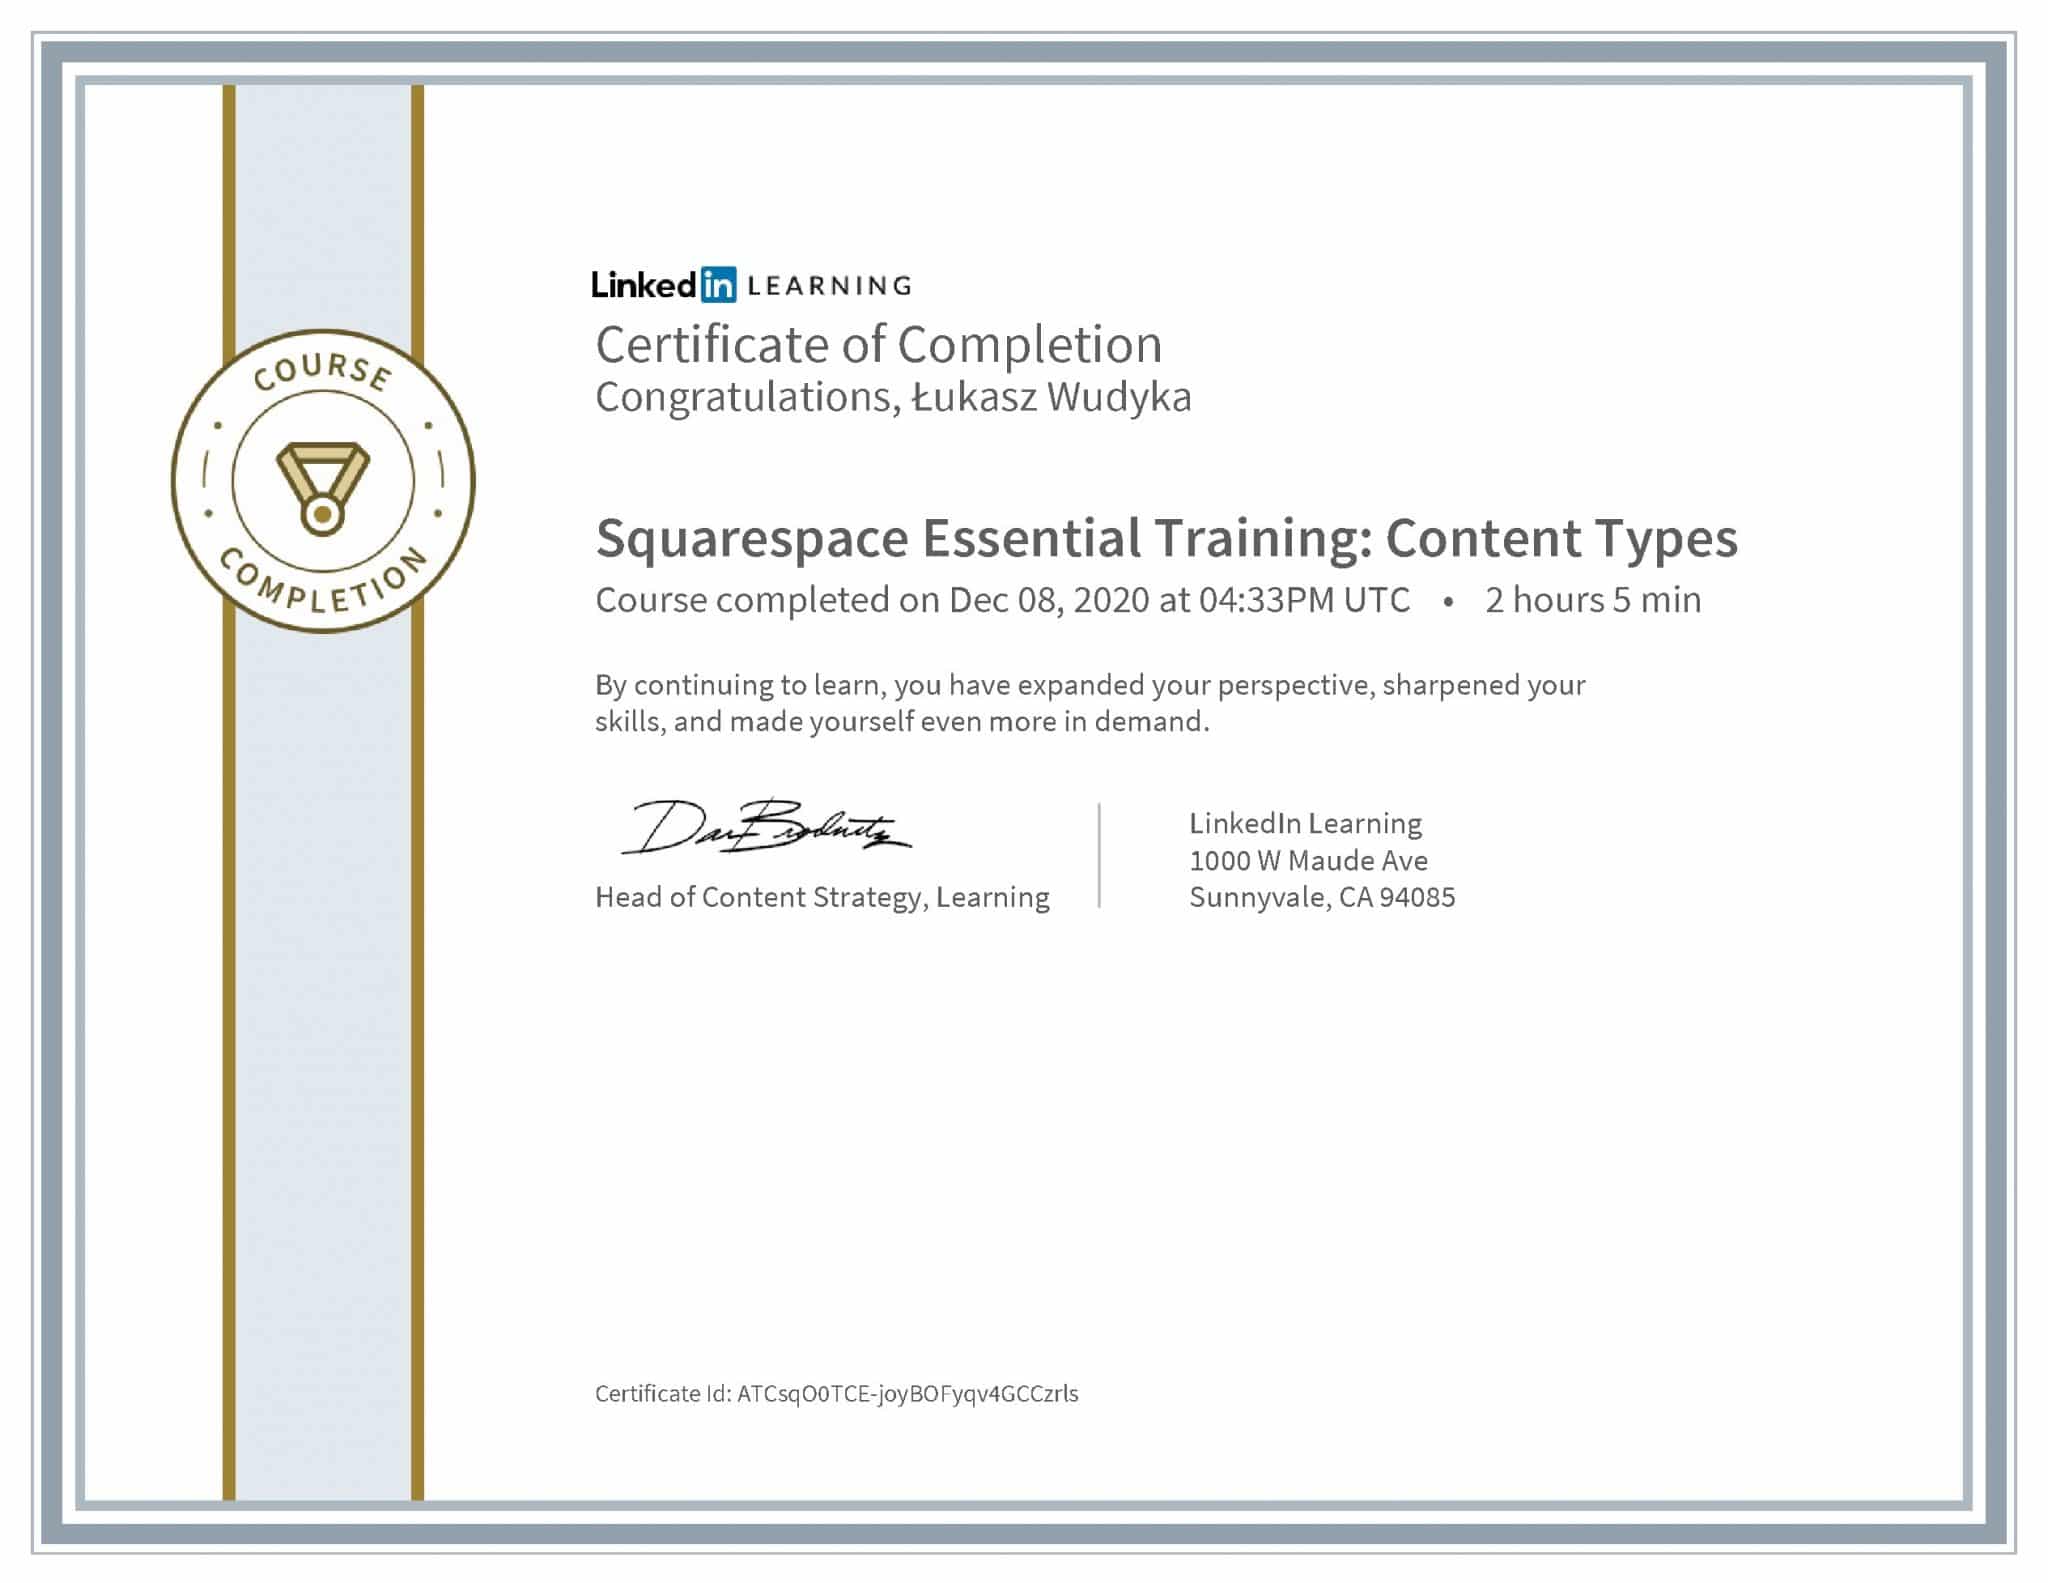 Łukasz Wudyka certyfikat LinkedIn Squarespace Essential Training: Content Types